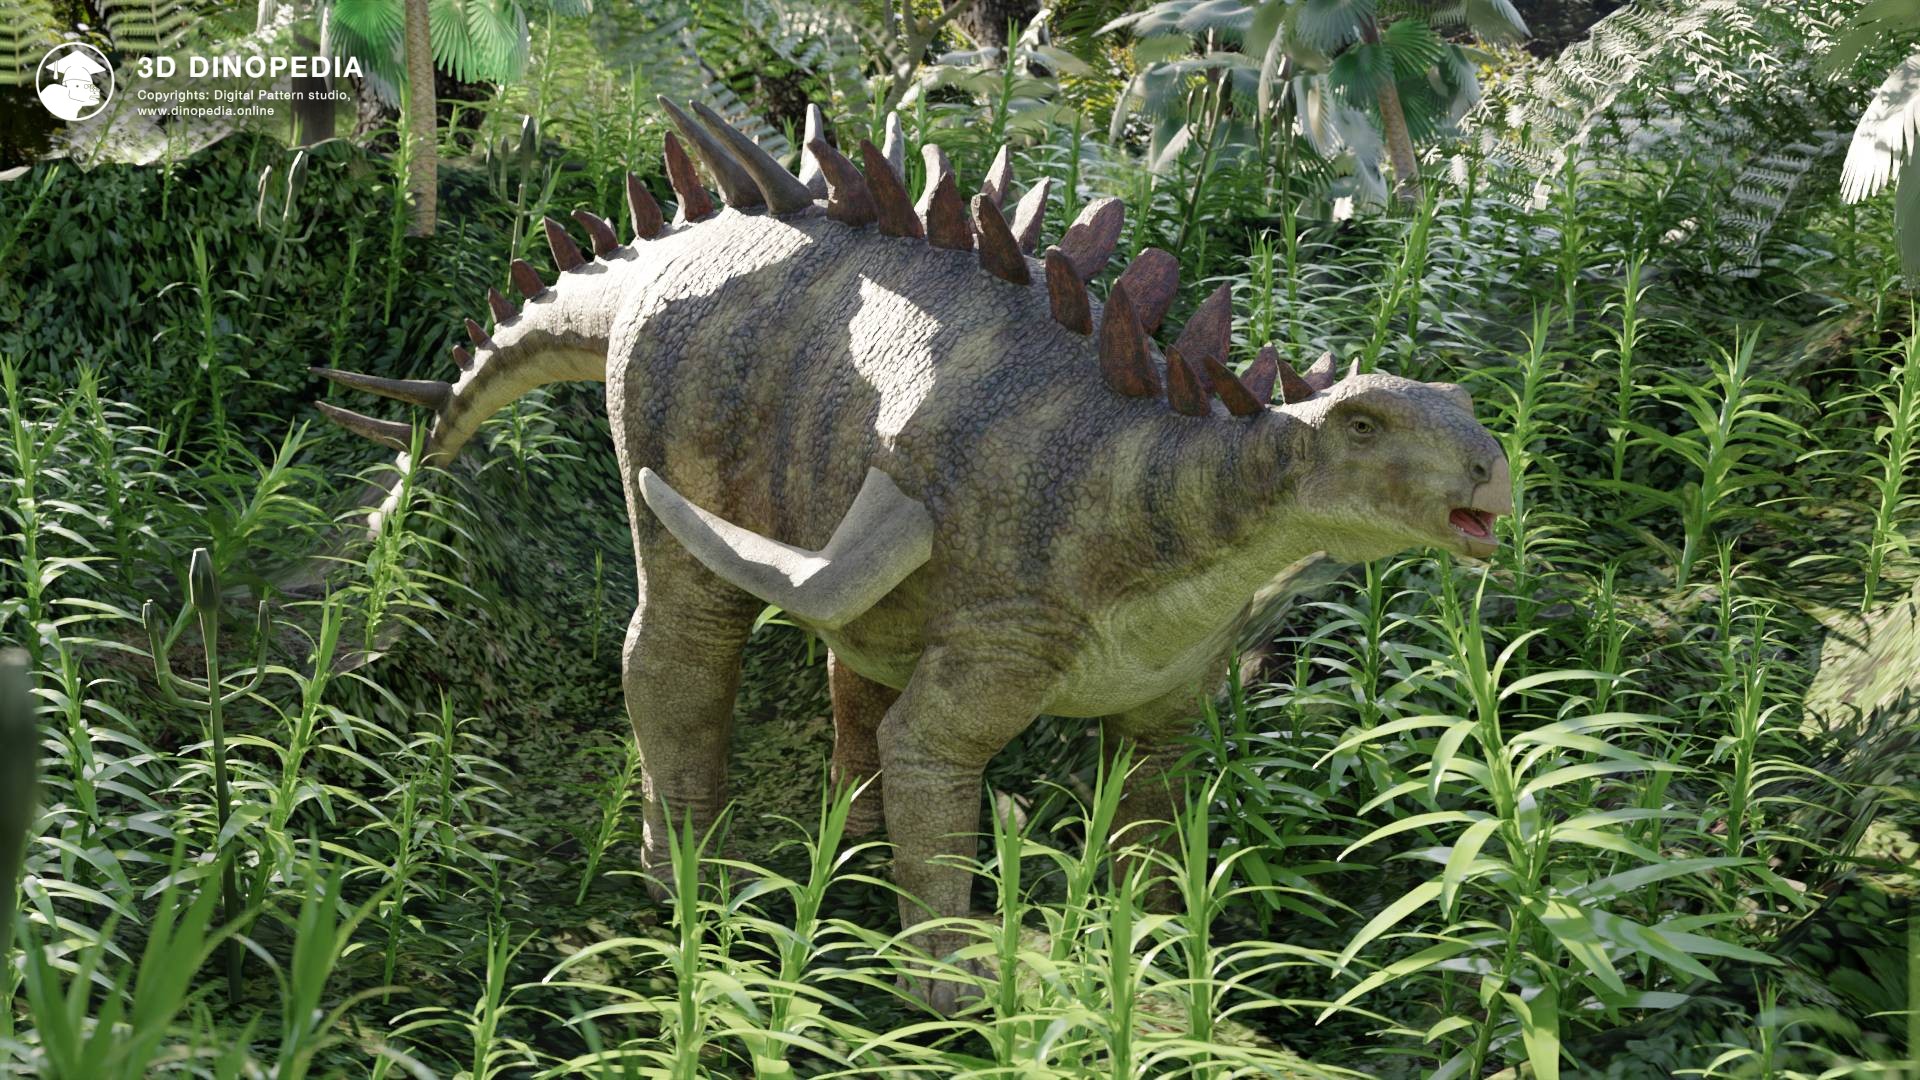 3D Dinopedia Gas, Money, and 30 Dinosaurs